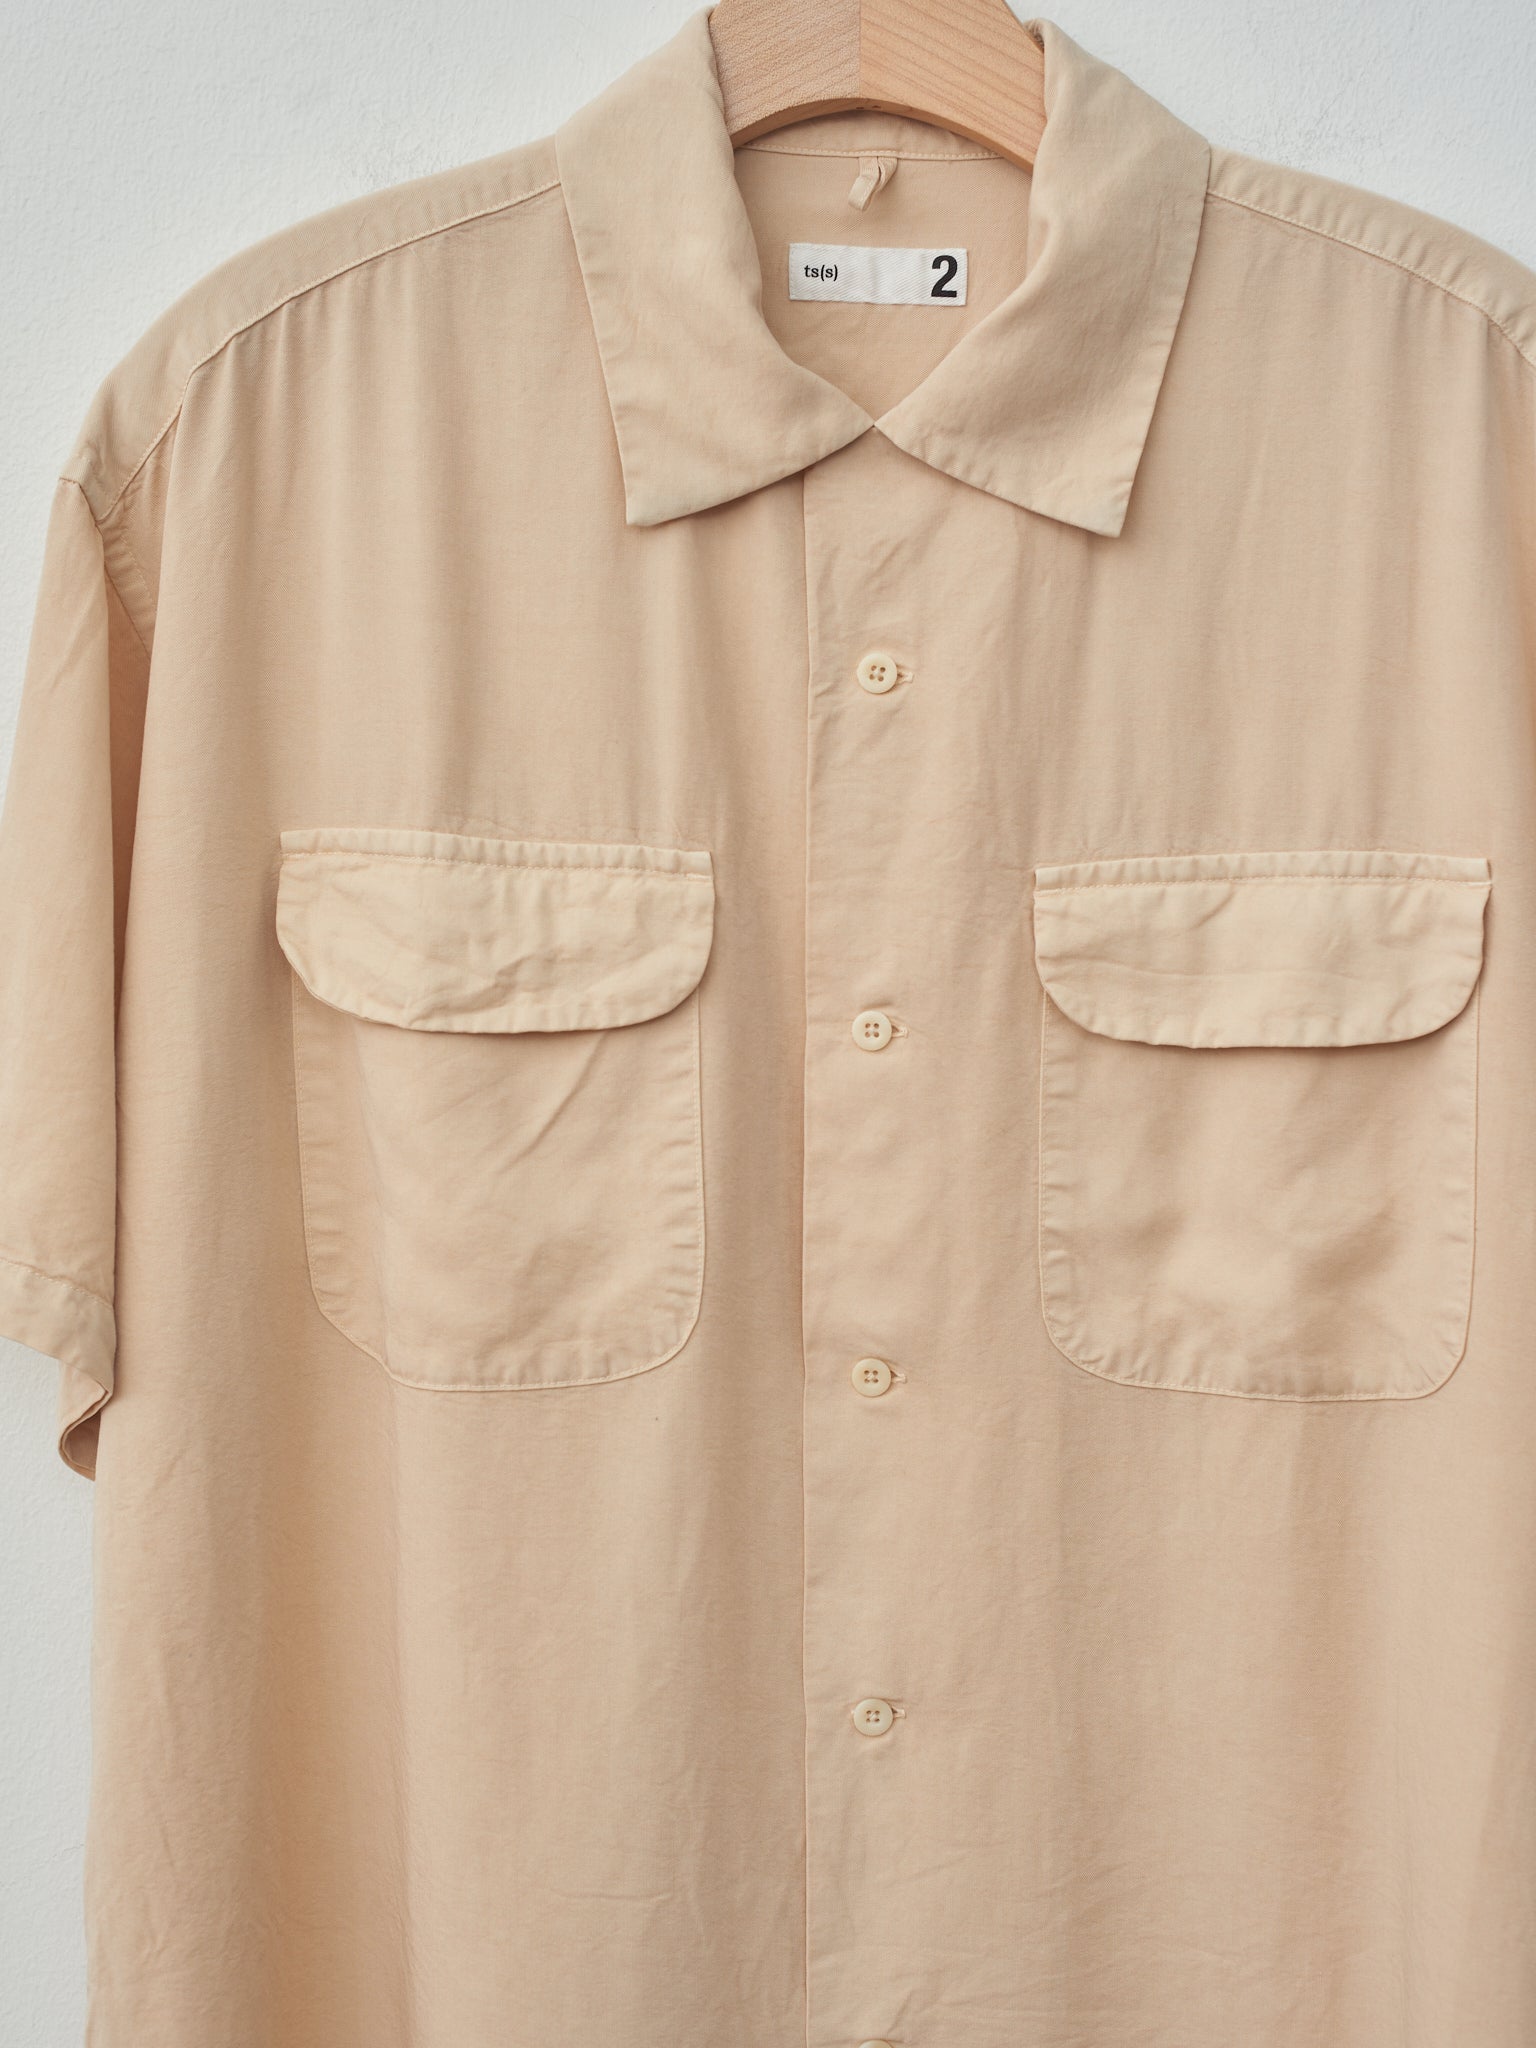 Namu Shop - ts(s) Garment Dye Round Flap Pocket S/S Shirt - Cream